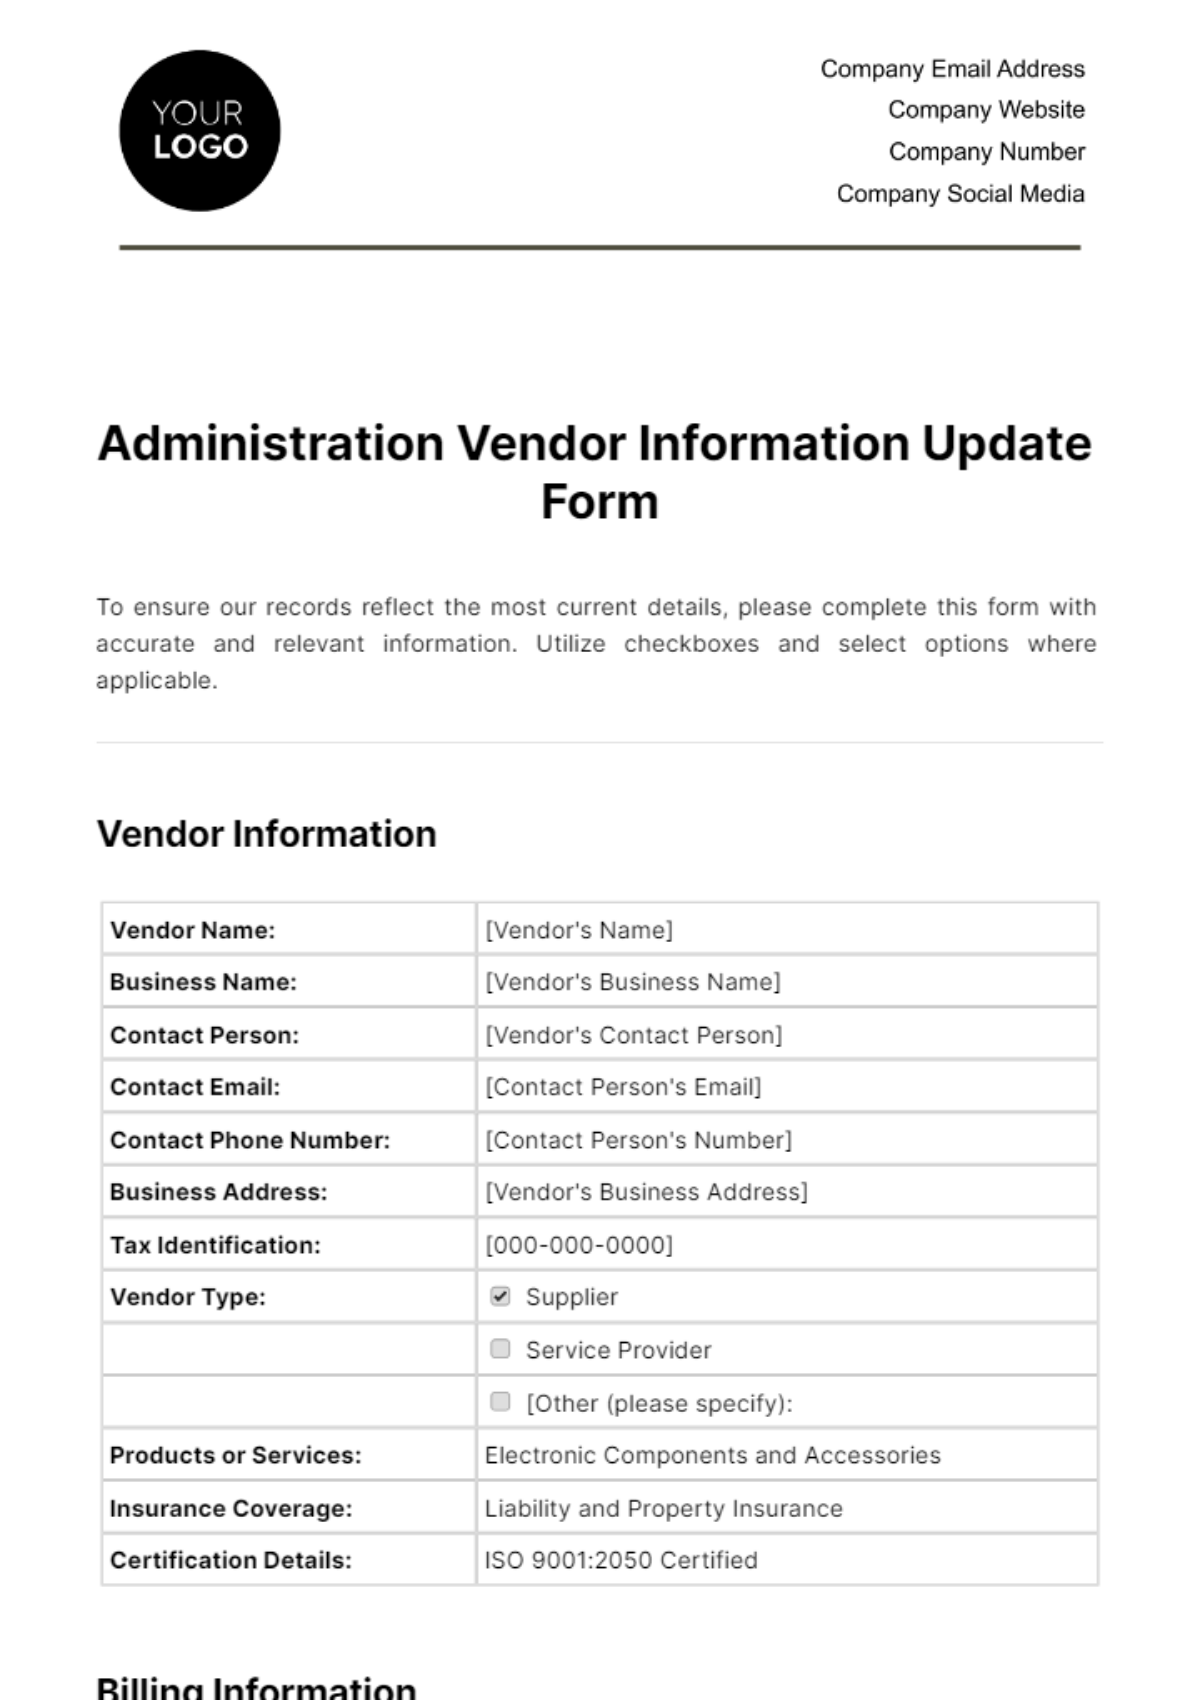 Free Administration Vendor Information Update Form Template